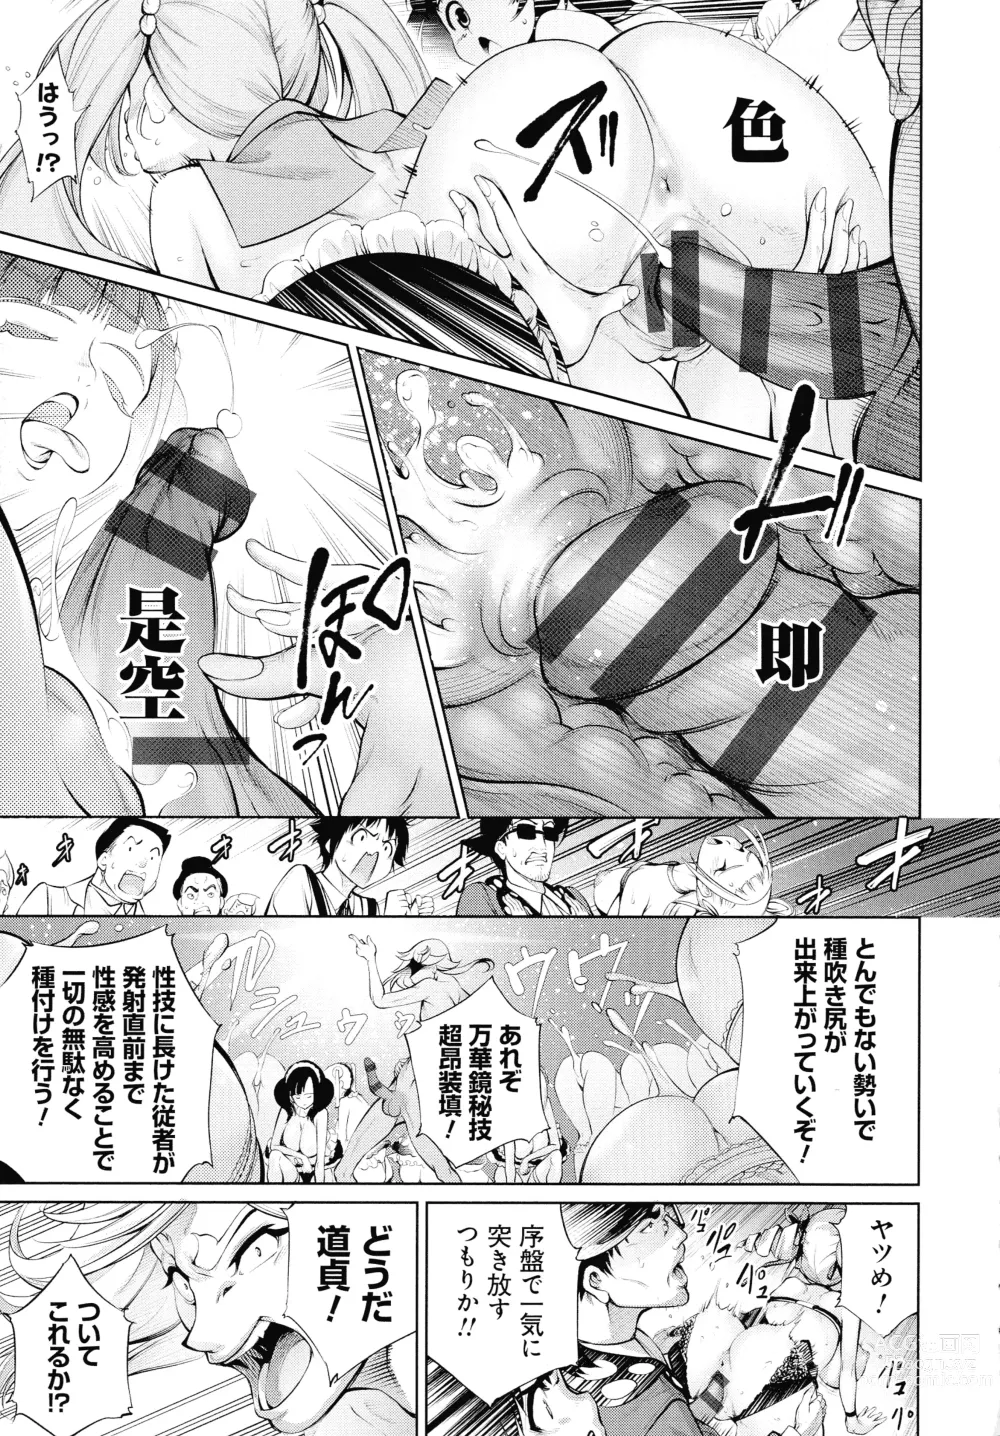 Page 227 of manga Dennou Bitch -Lets Play!-